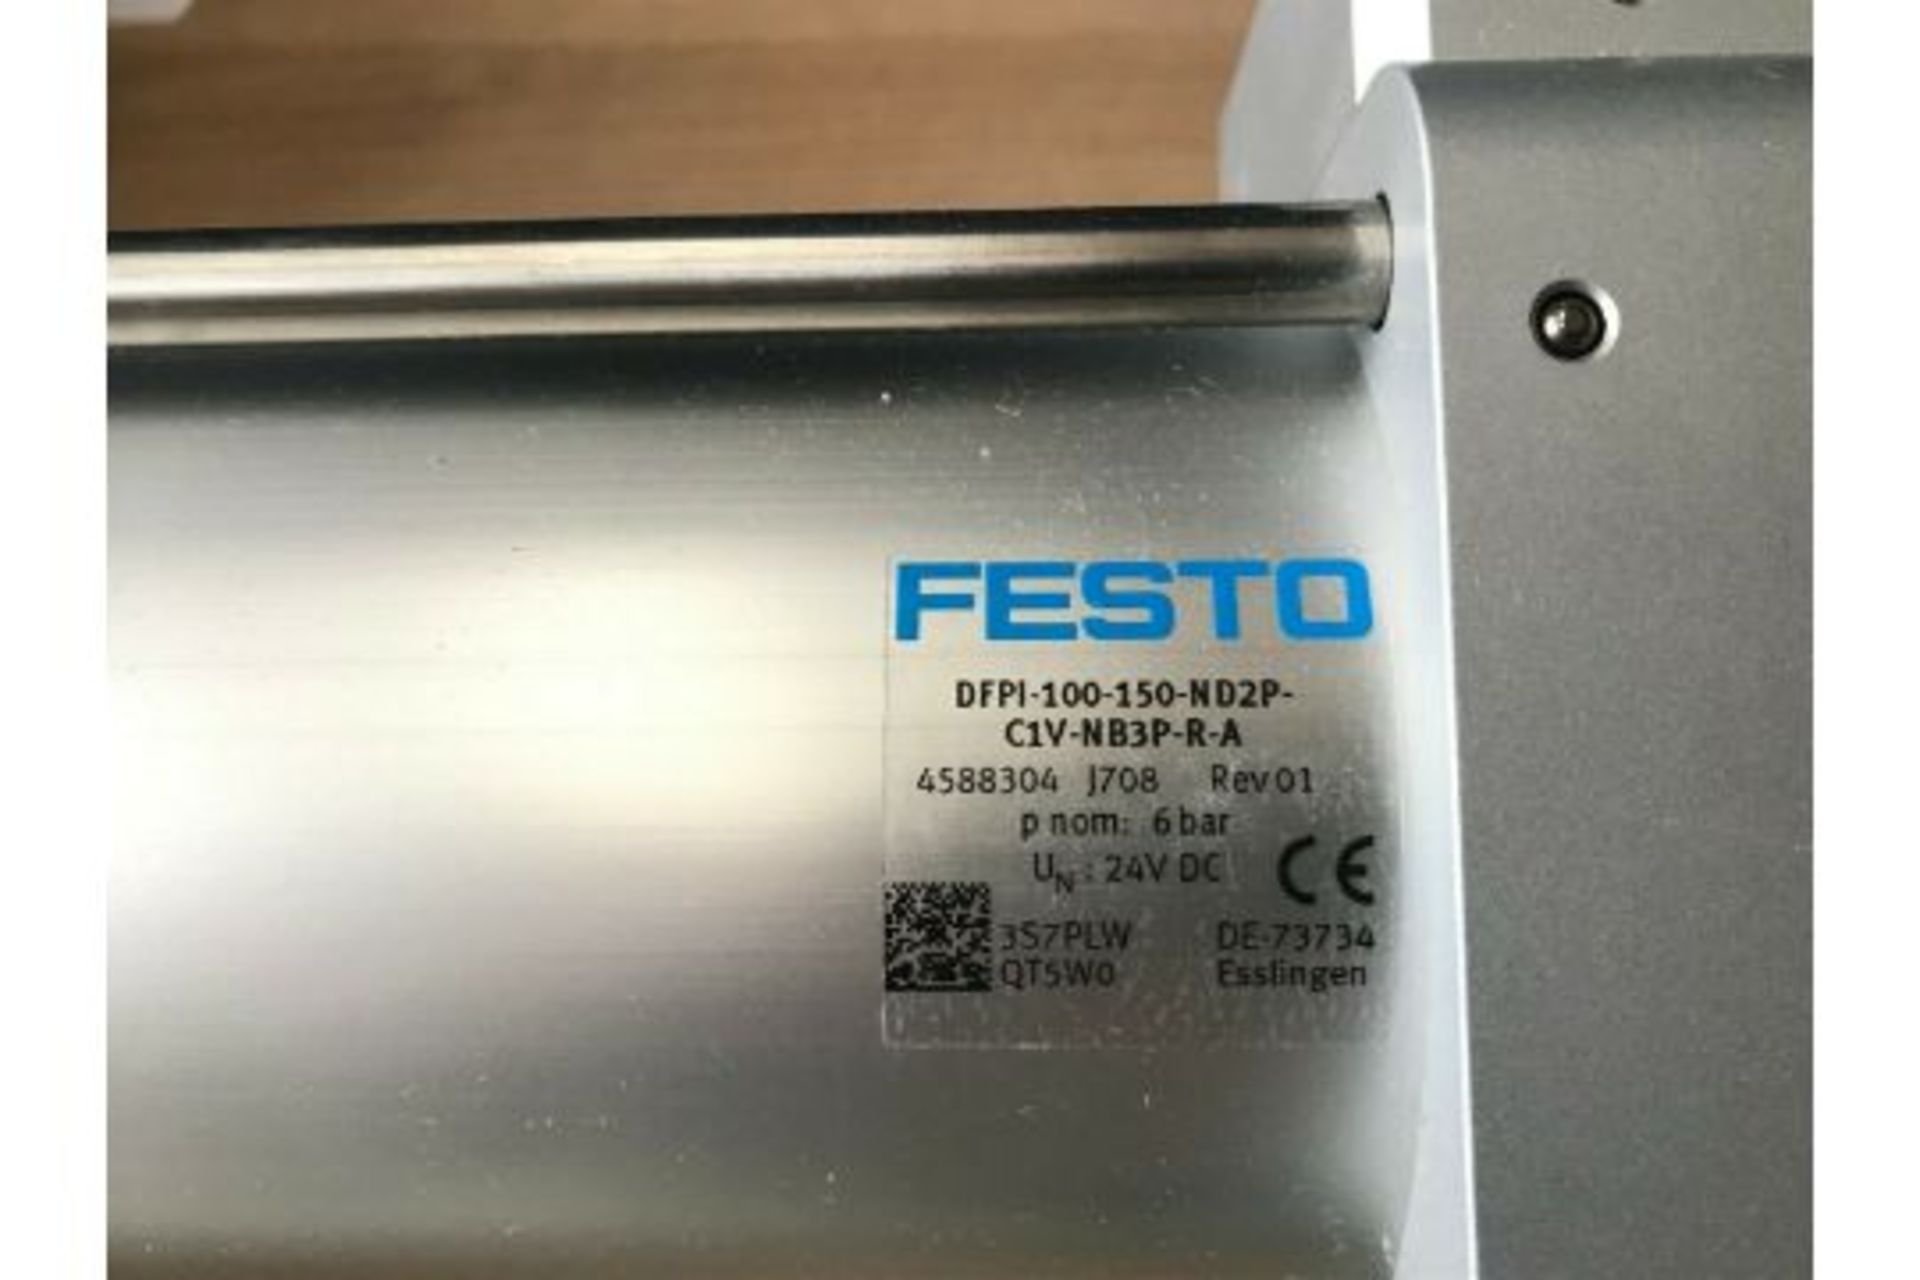 2 X Festo DFPI Linear Actuators, DFPI-100-150-ND2P-C1VN63P-A - Image 3 of 5